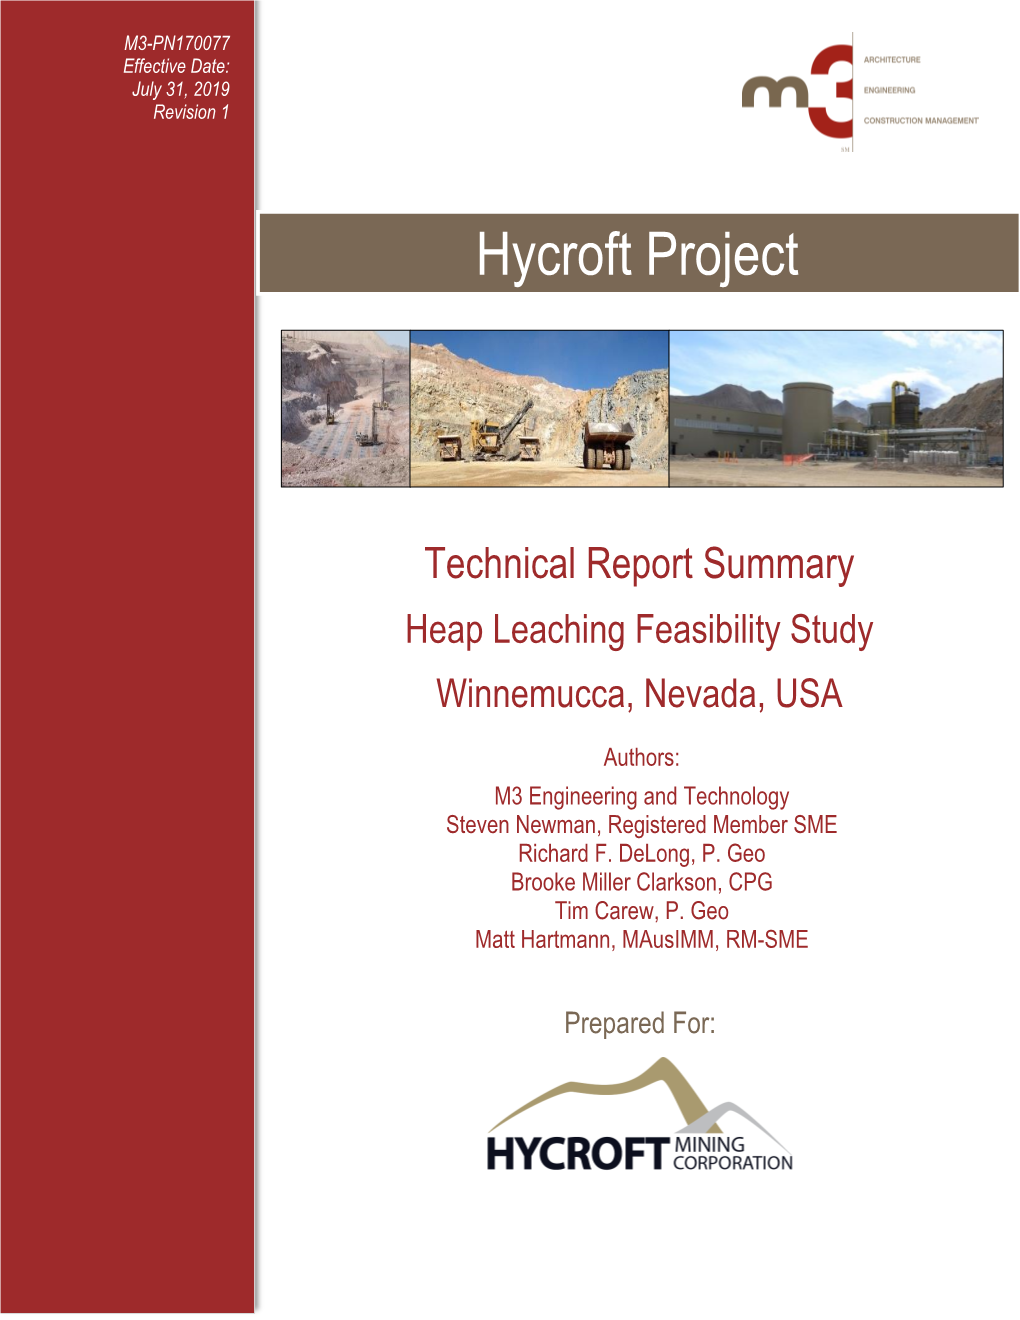 Recent Technical Report Summary